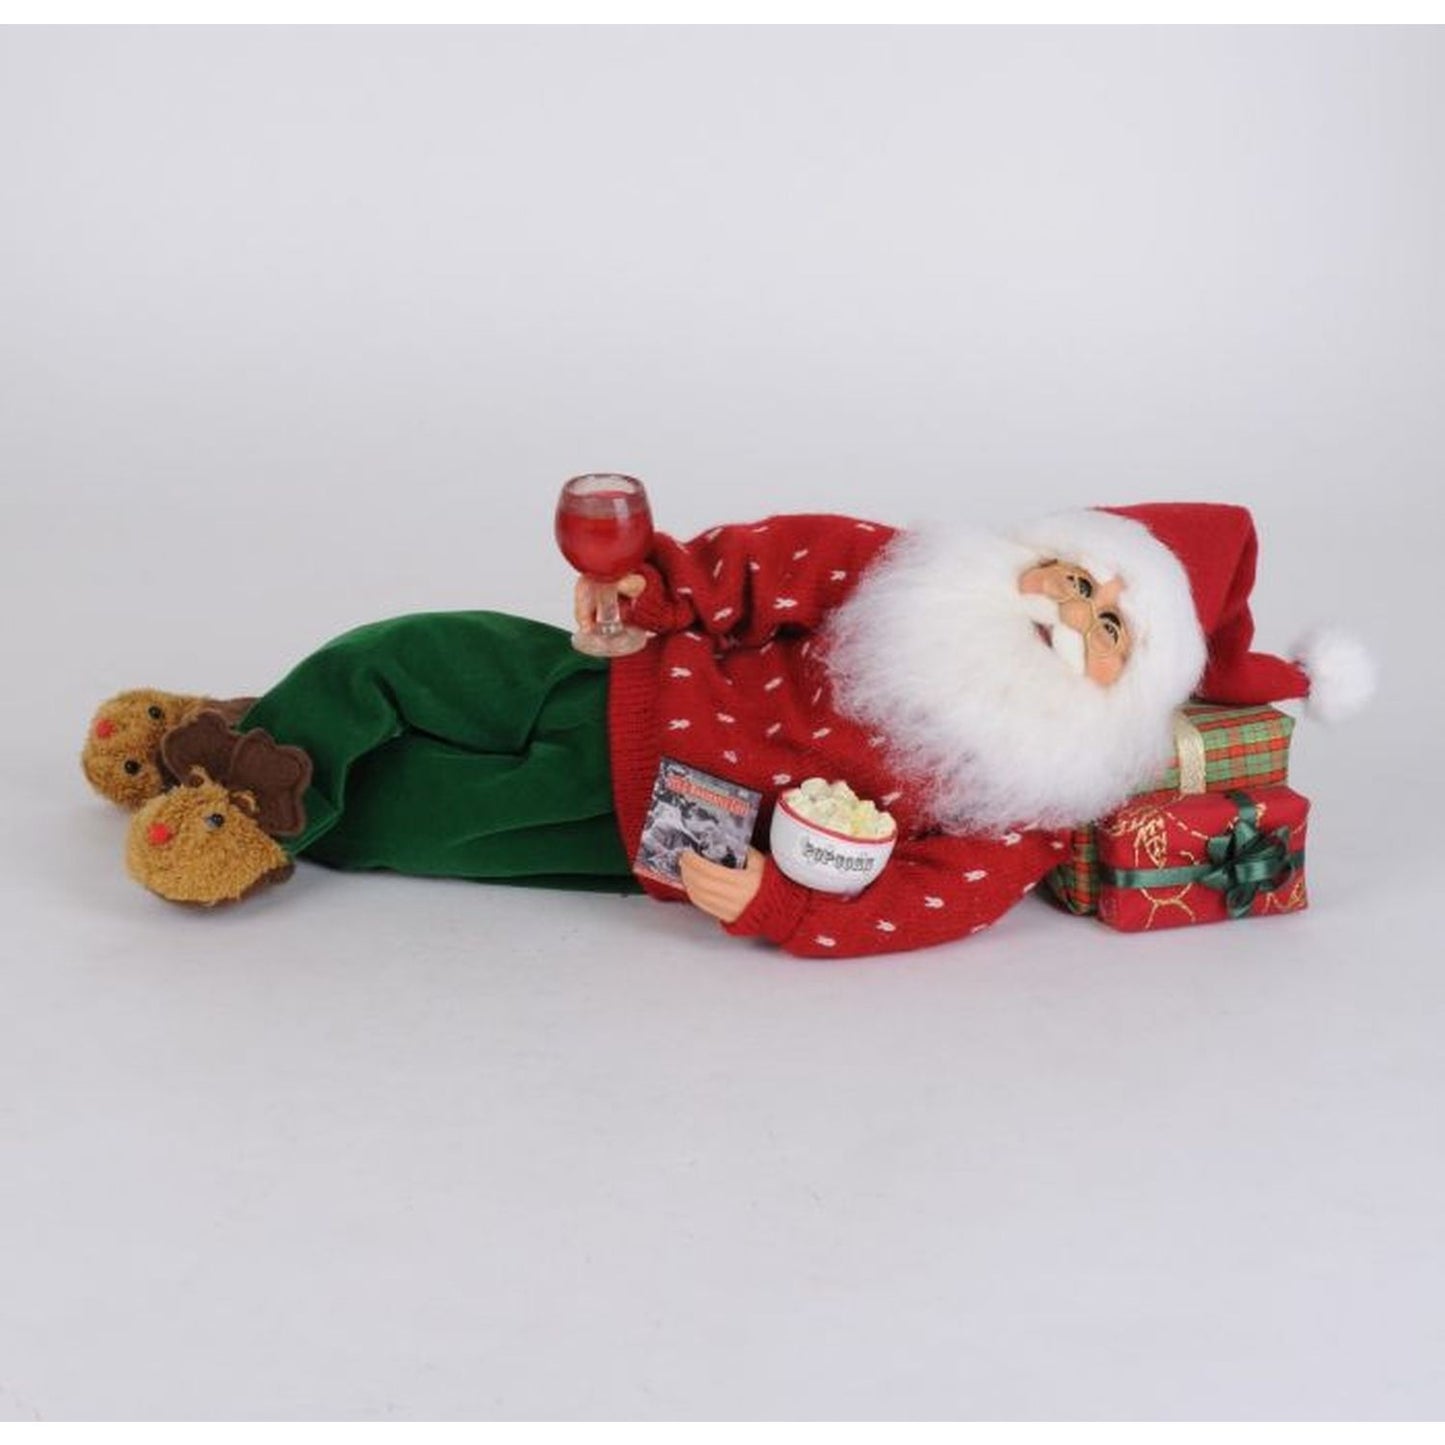 Karen Didion Lying Wine and a Movie Santa Chrismas Figurine